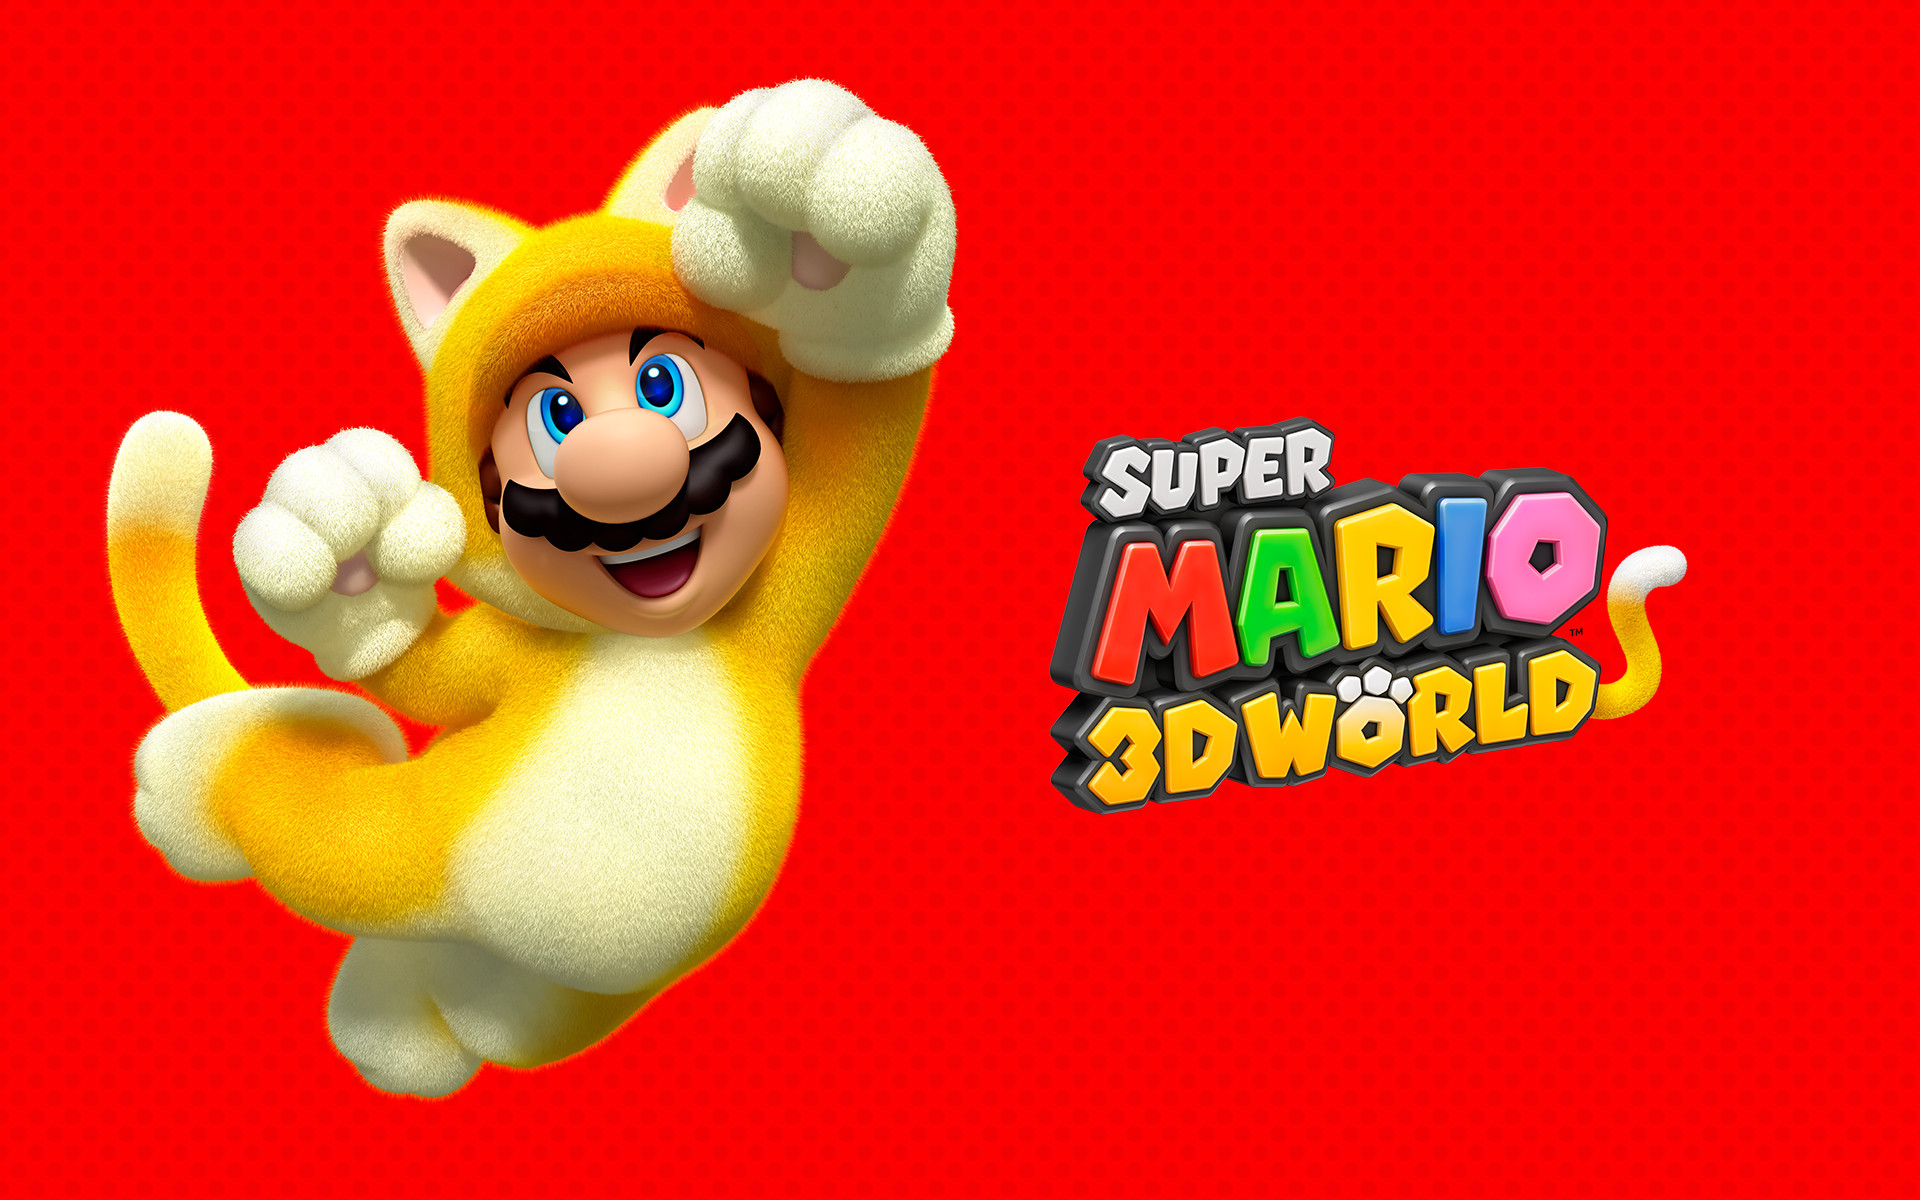 Super mario world. Марио 3д ворлд. Супер Марио 3d World. Super Mario 3. Супер Марио ворлд 3.